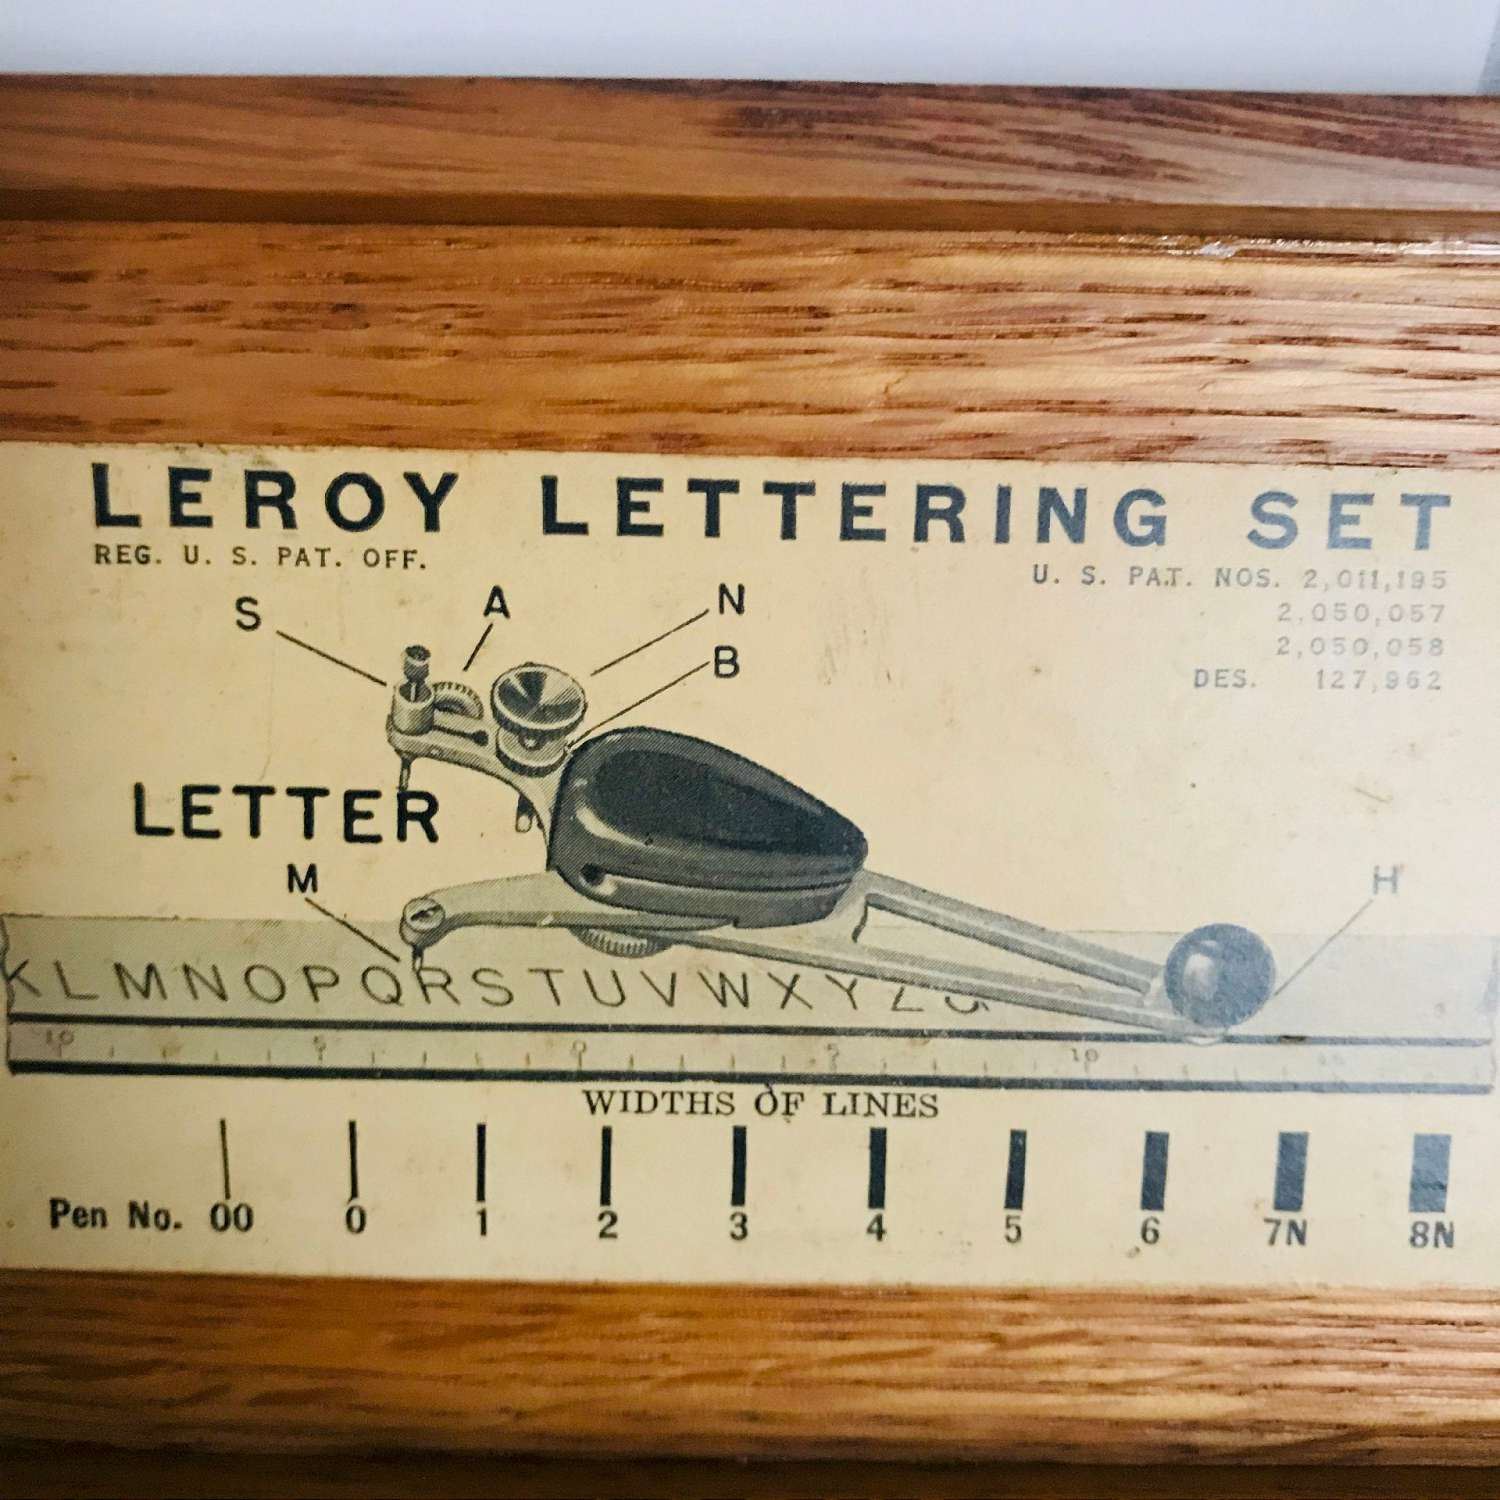 https://www.truevintageantiques.com/wp-content/uploads/2019/12/vintage-lettering-kit-leroy-lettering-set-keuffel-esser-new-york-1944-template-farmhouse-office-collectible-display-5df118d52-scaled.jpg